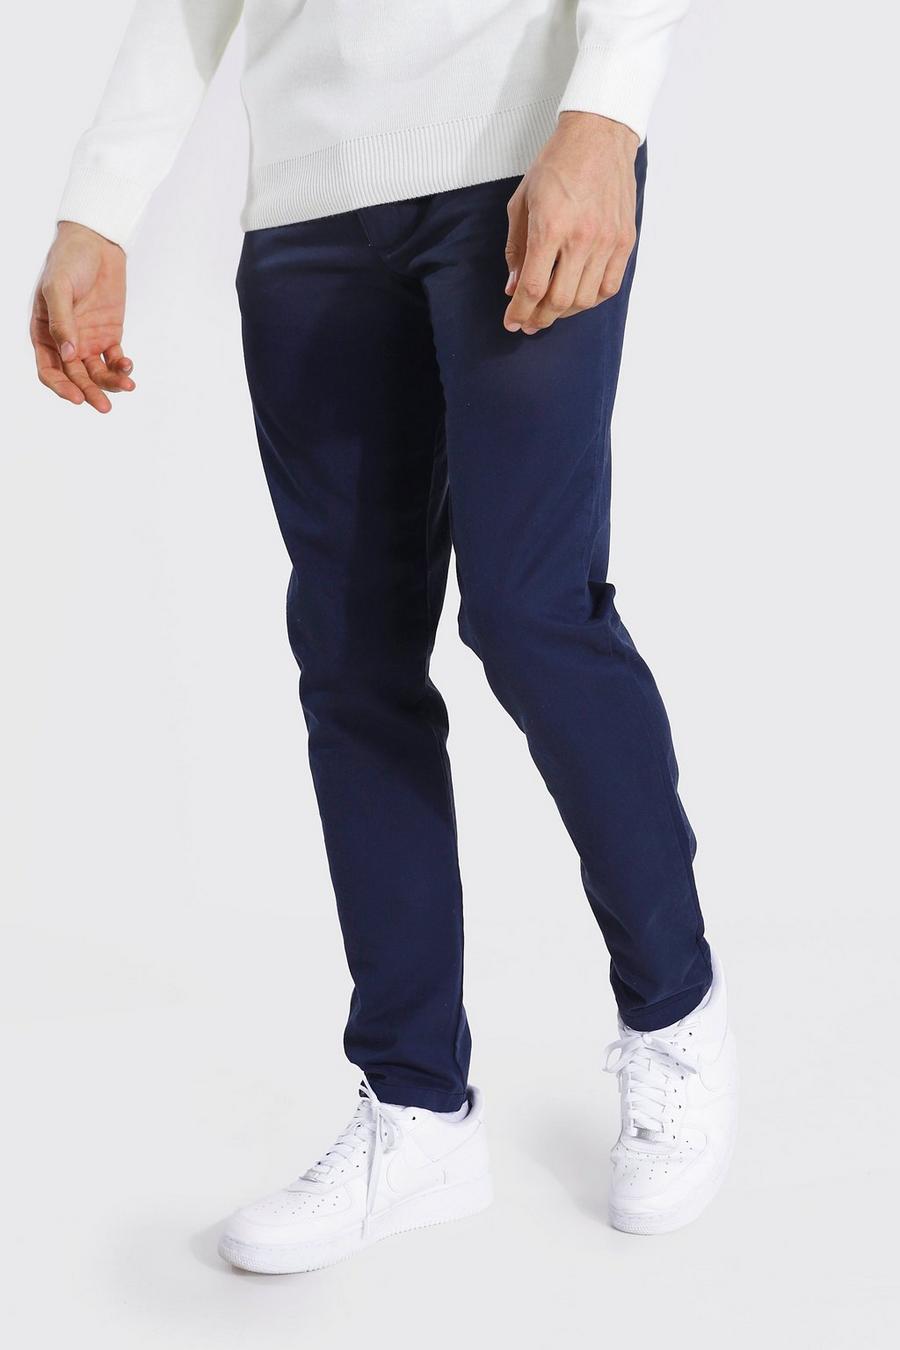 Tall - Pantalon slim chino, Navy marineblau